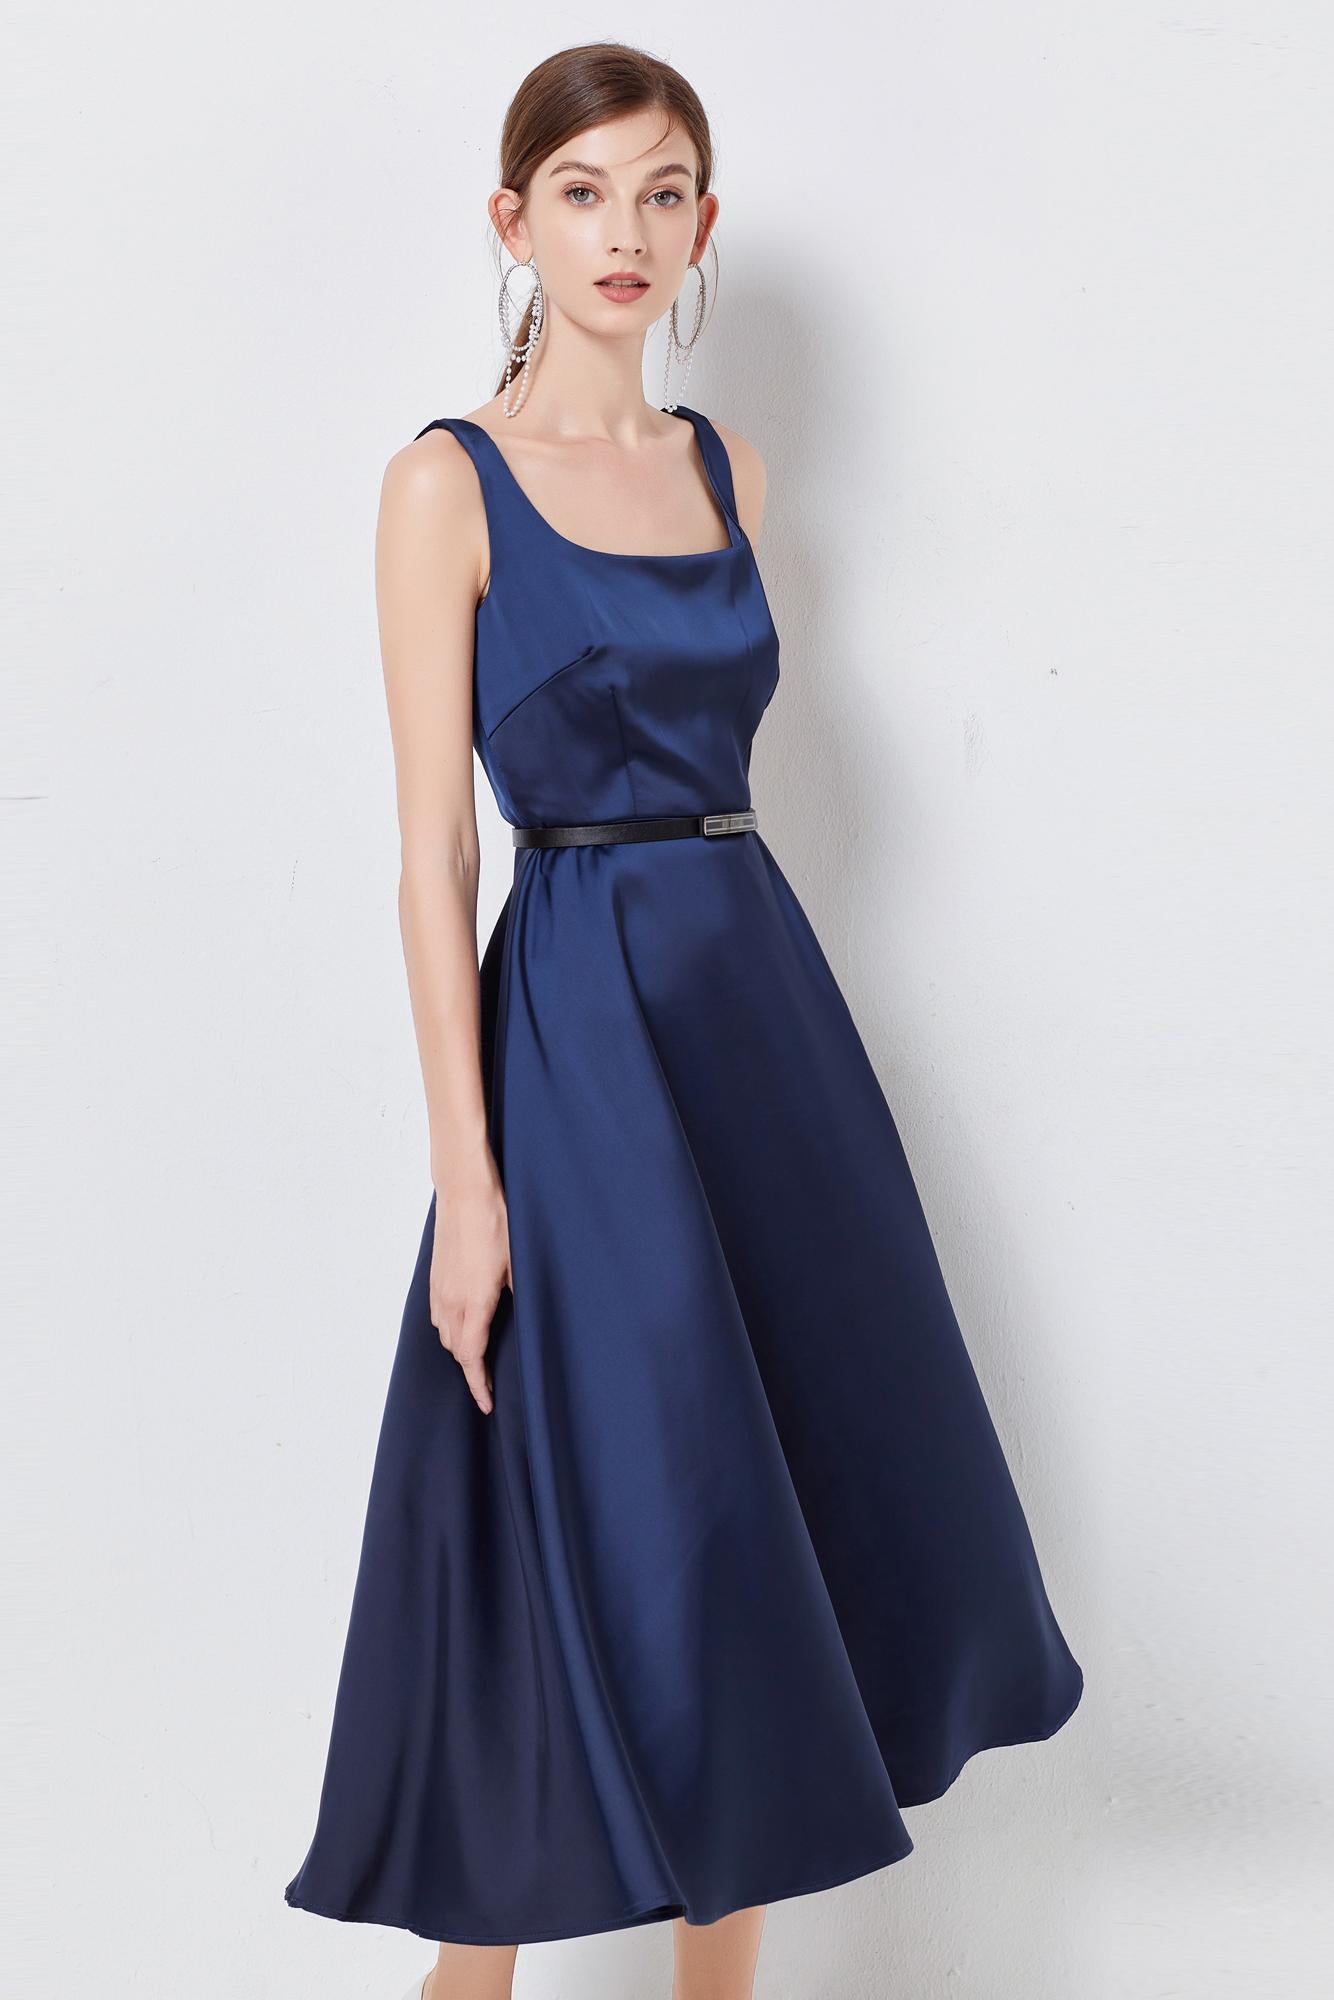 Navy Blue Sleeveless Elegant Satin Dress with Belt